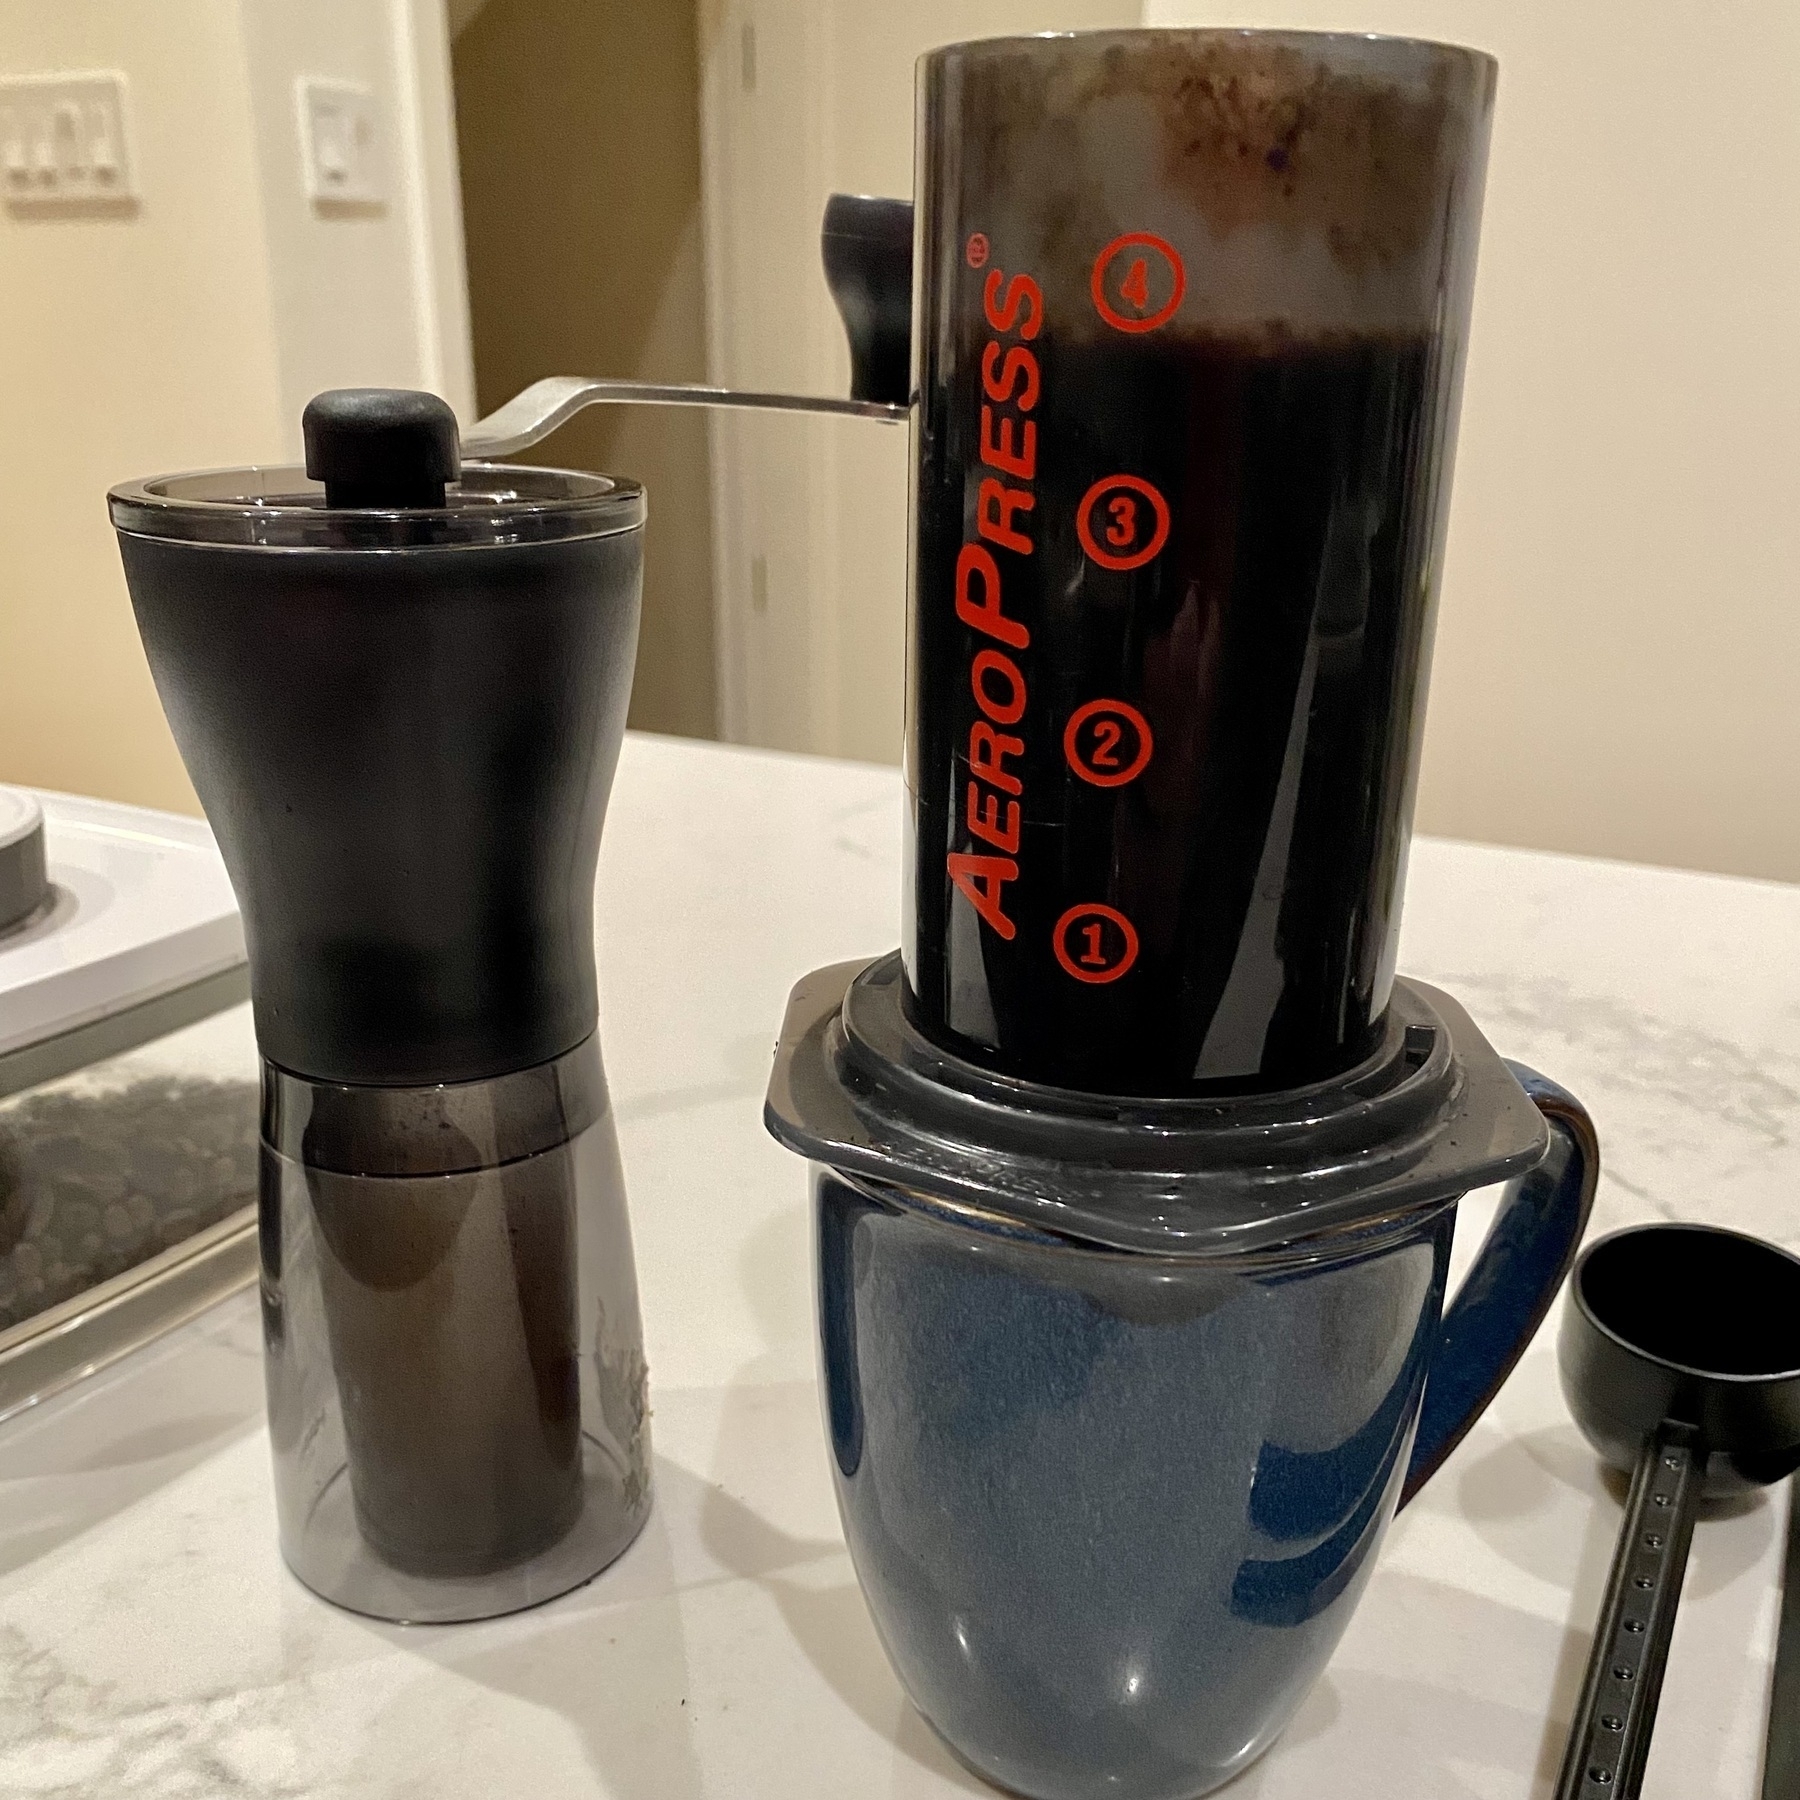 Making coffee with an Aeropress